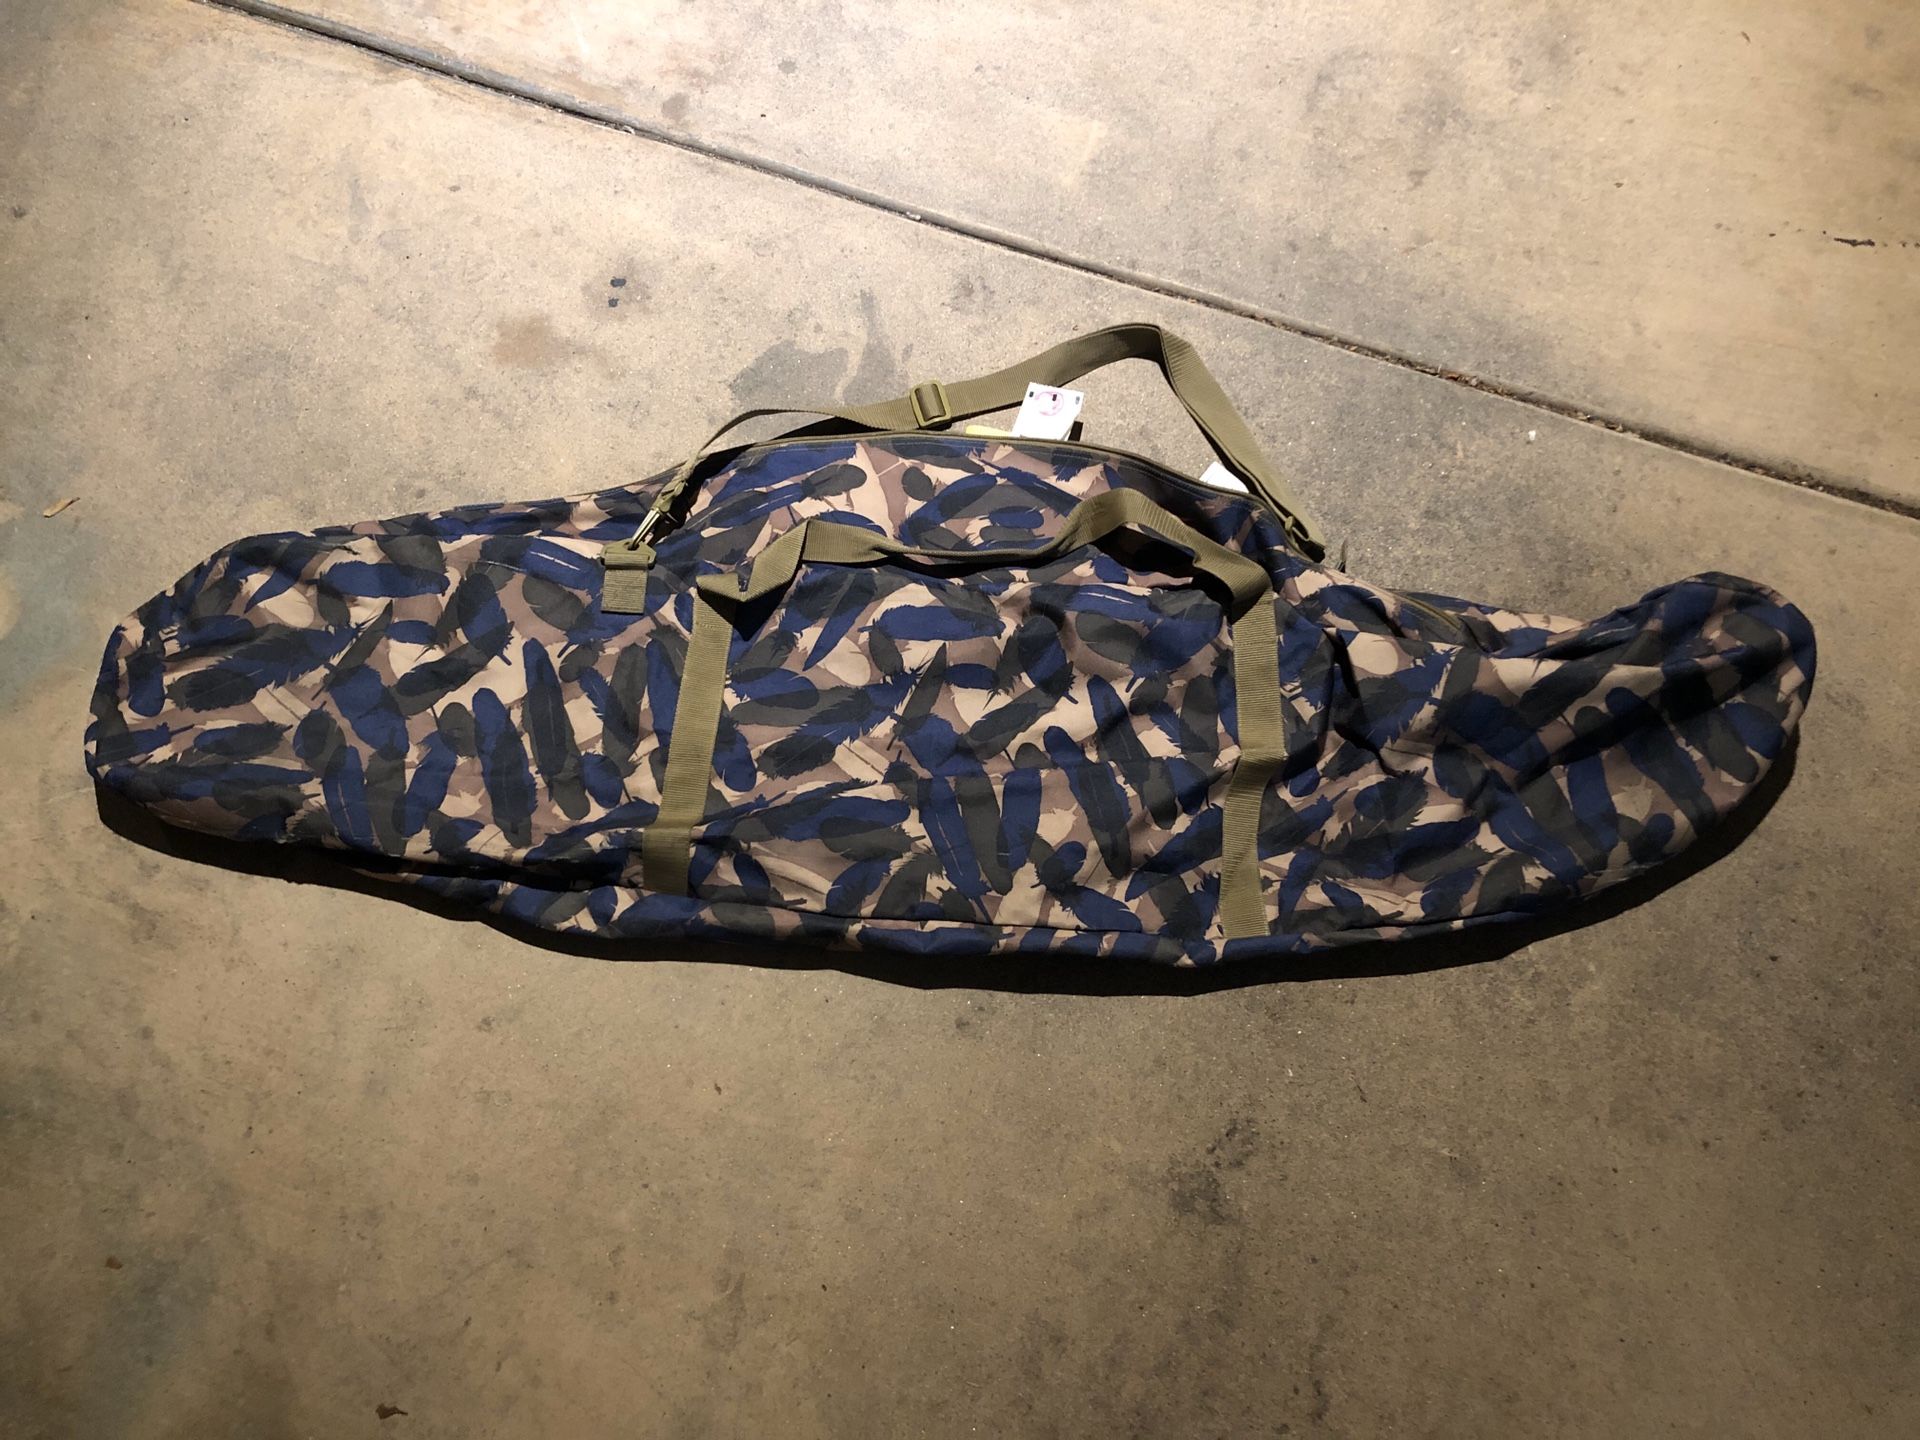 Snowboard Bag (men’s Burton size 151)